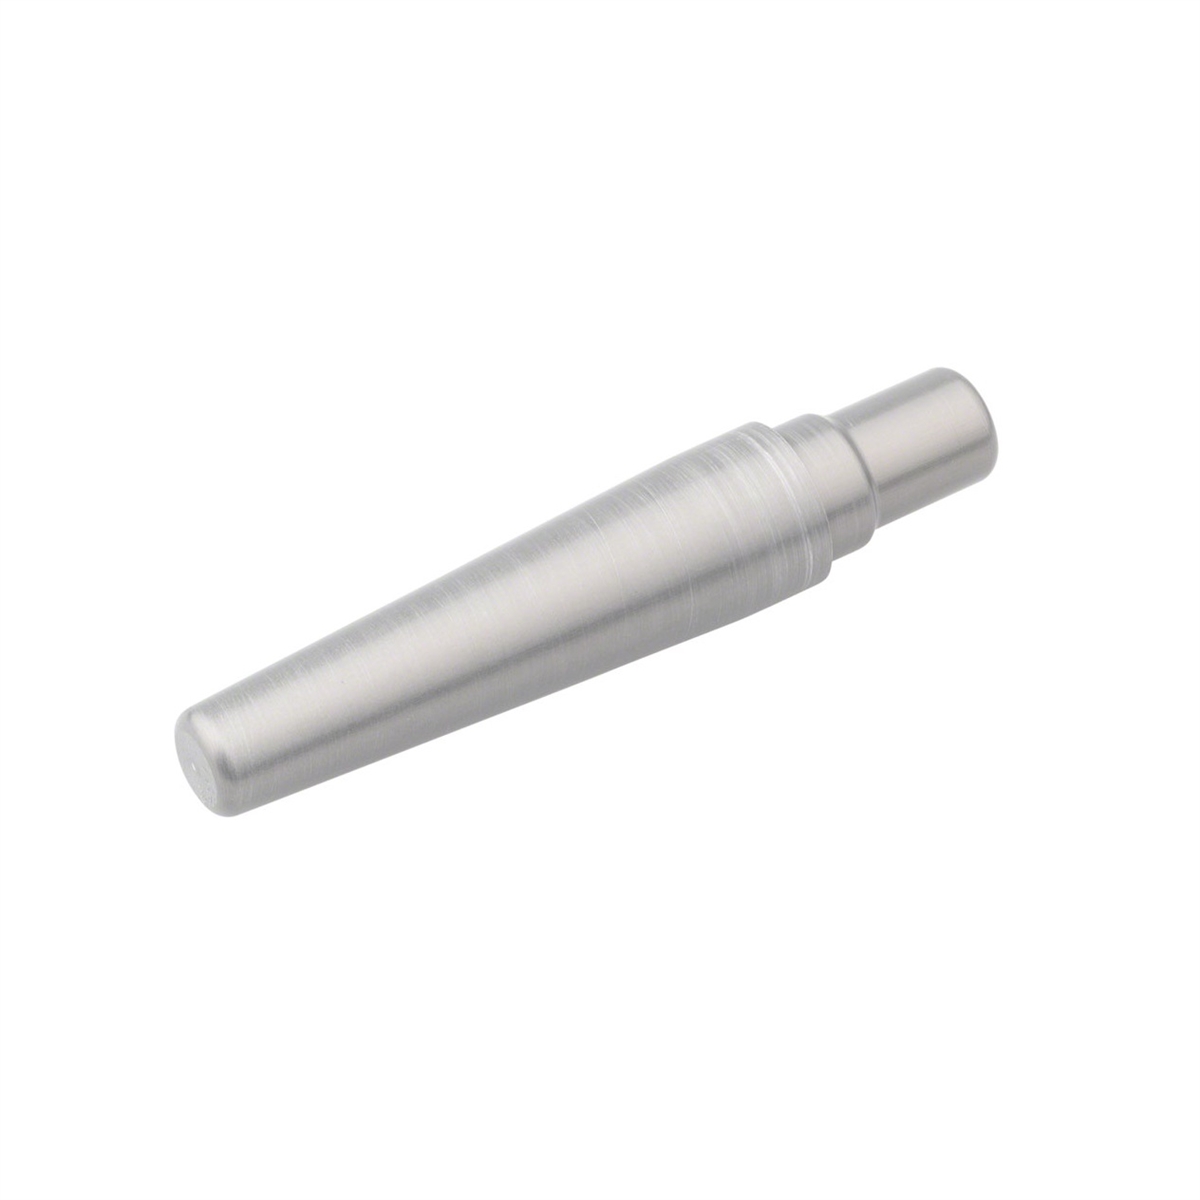 Seal bullet tool for NA2 shock absorber maintenance